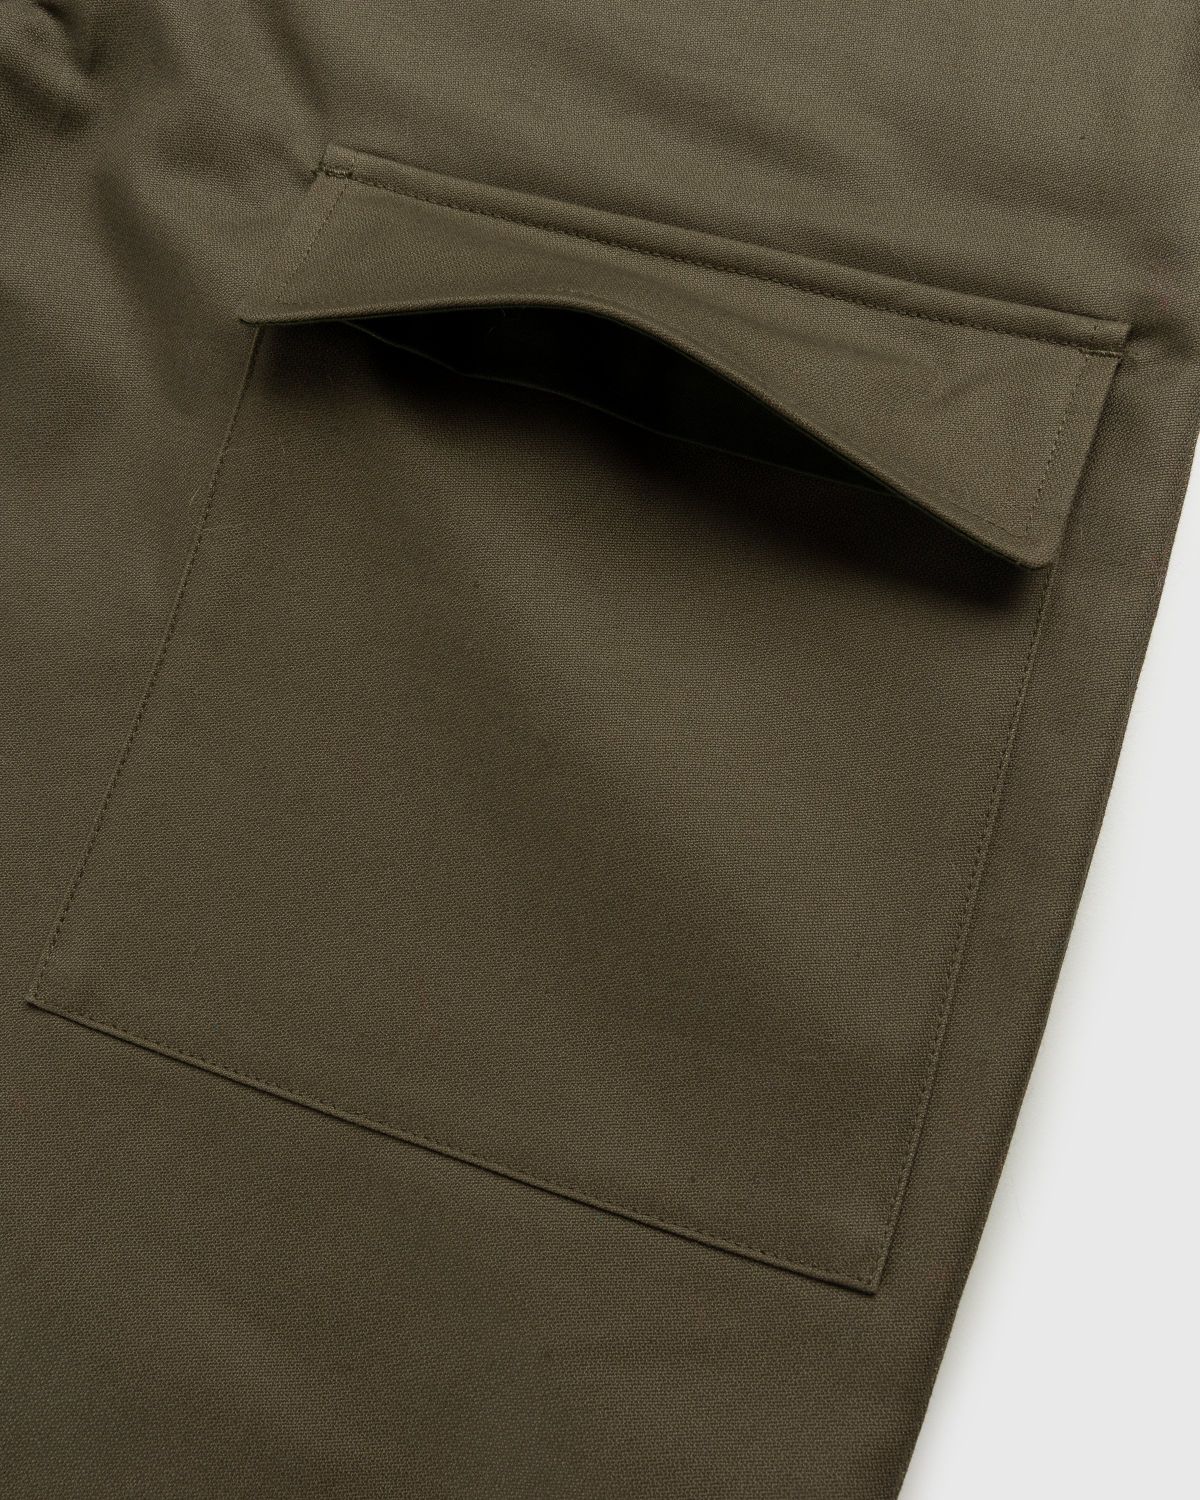 Kenzo – Tailored Pants Dark Khaki - Cargo Pants - Green - Image 6